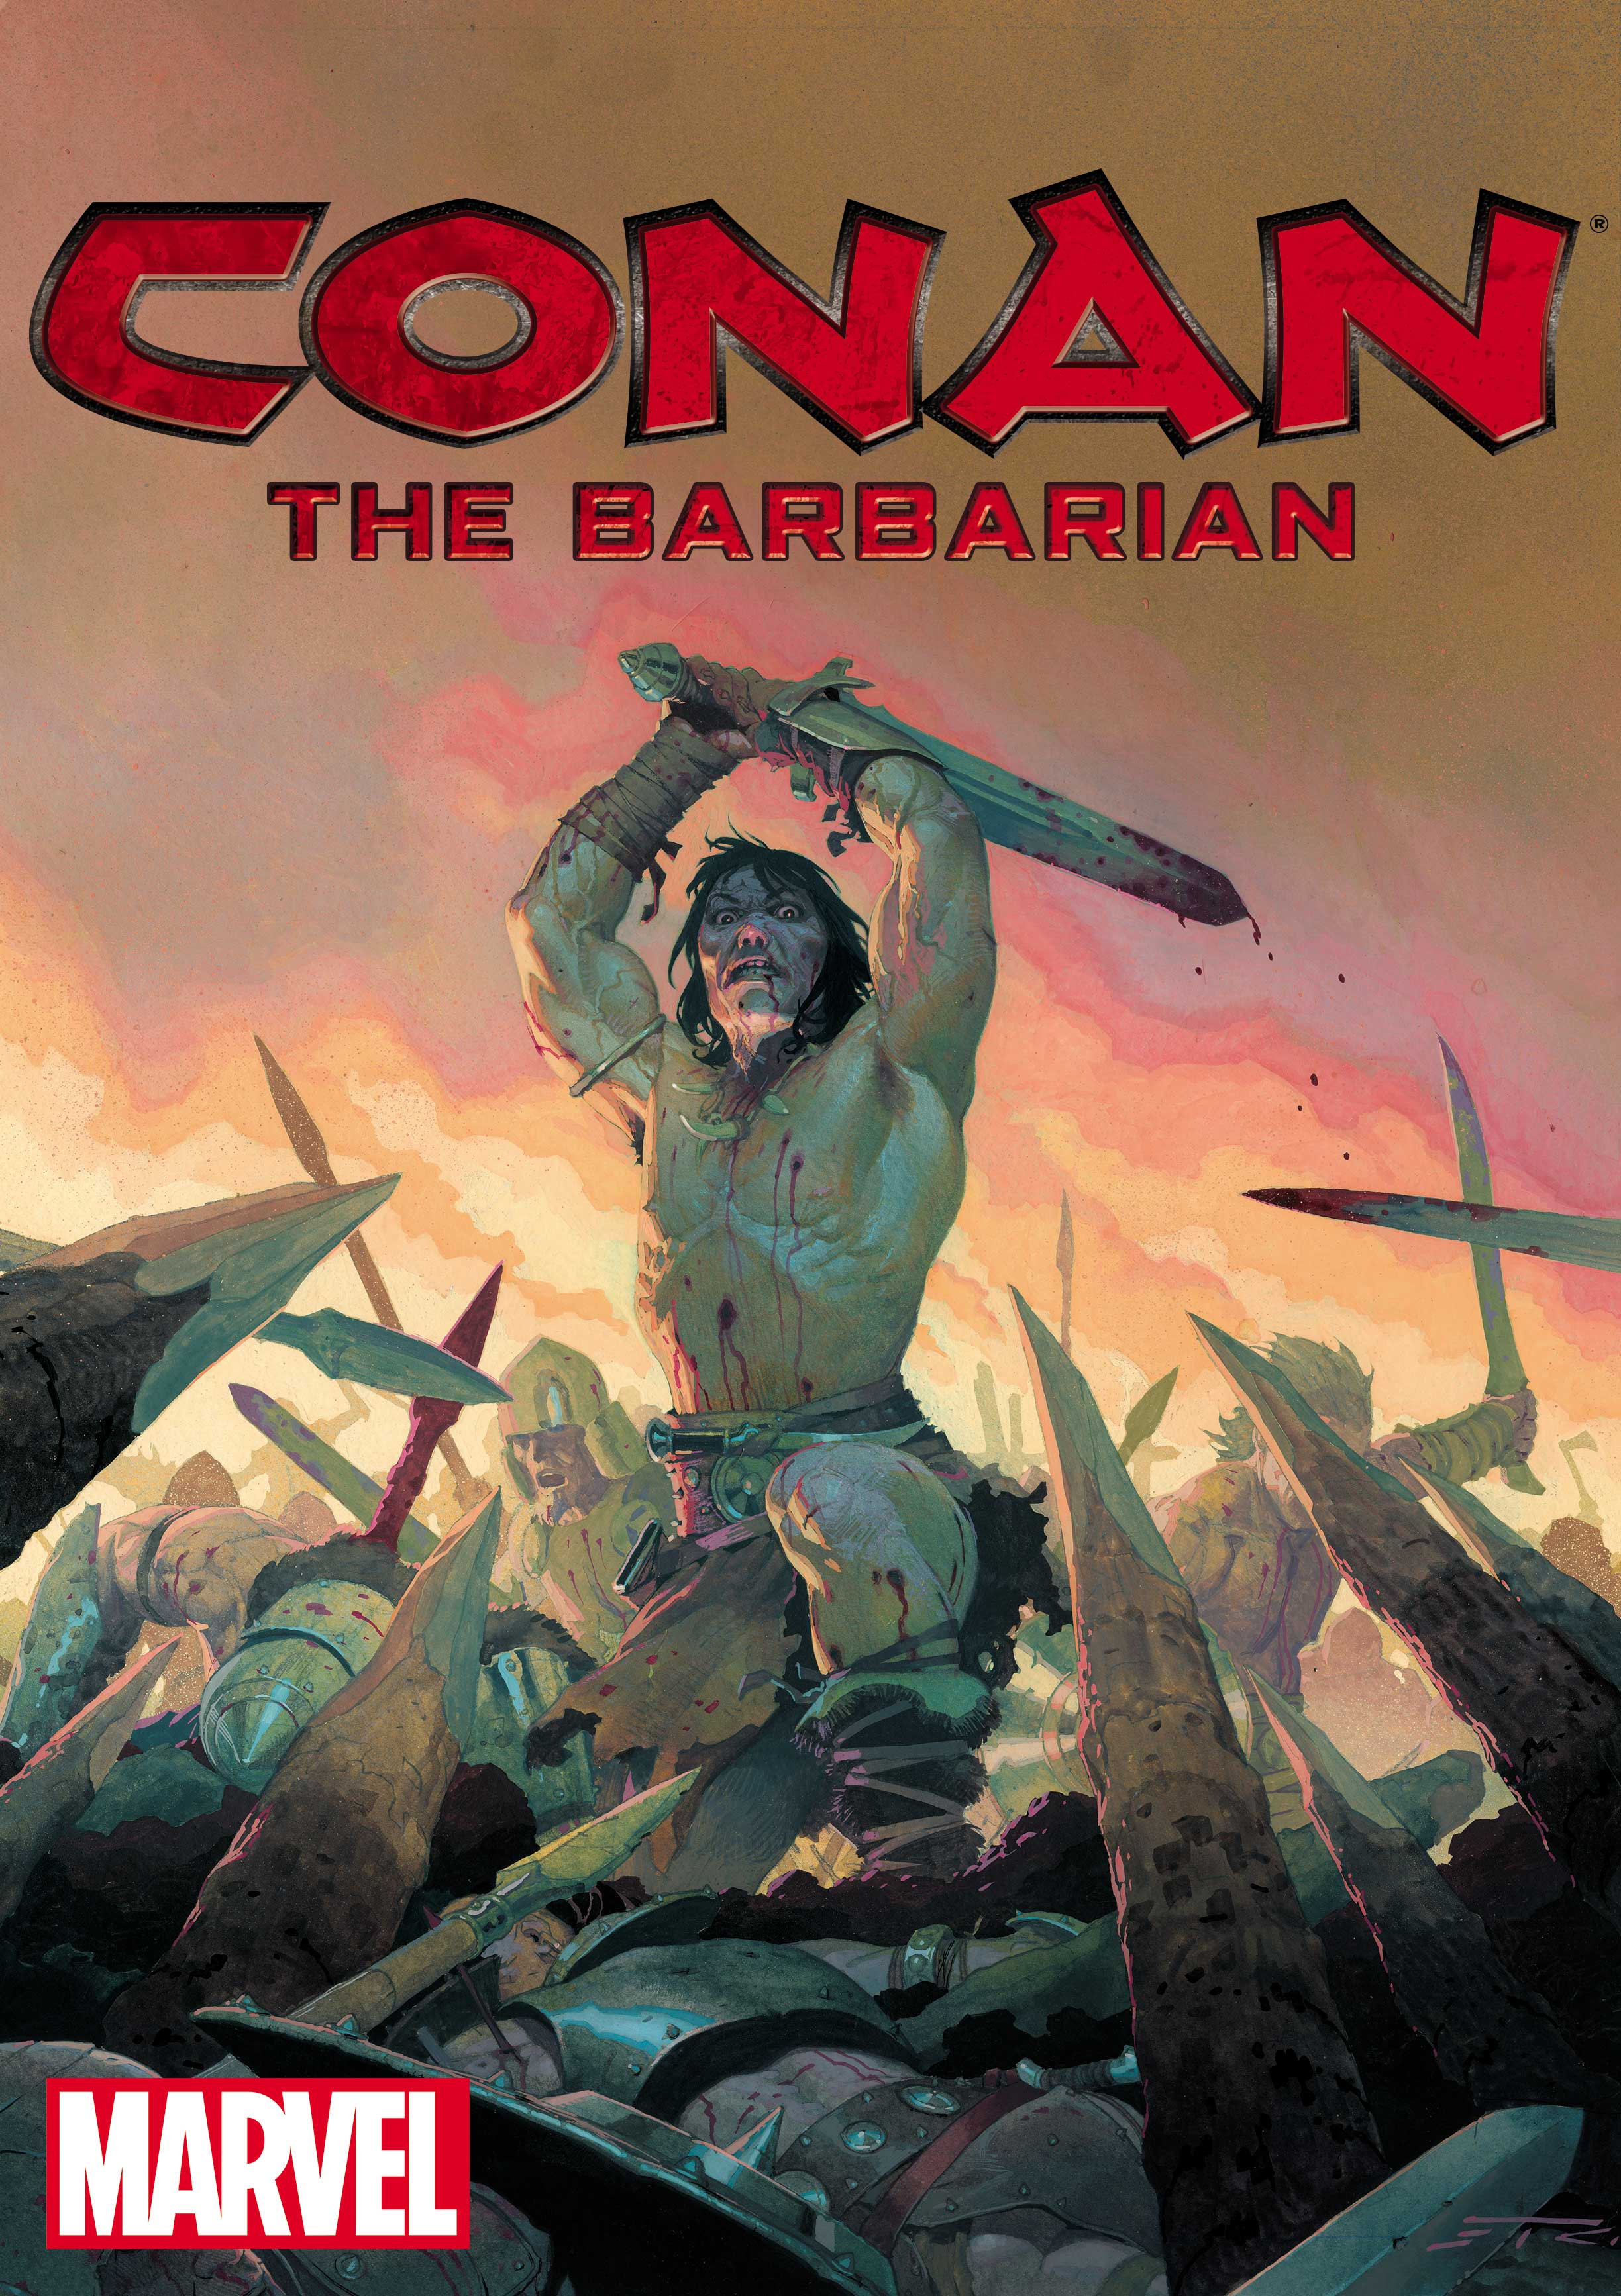 Conan returns to Marvel Comics in January '19